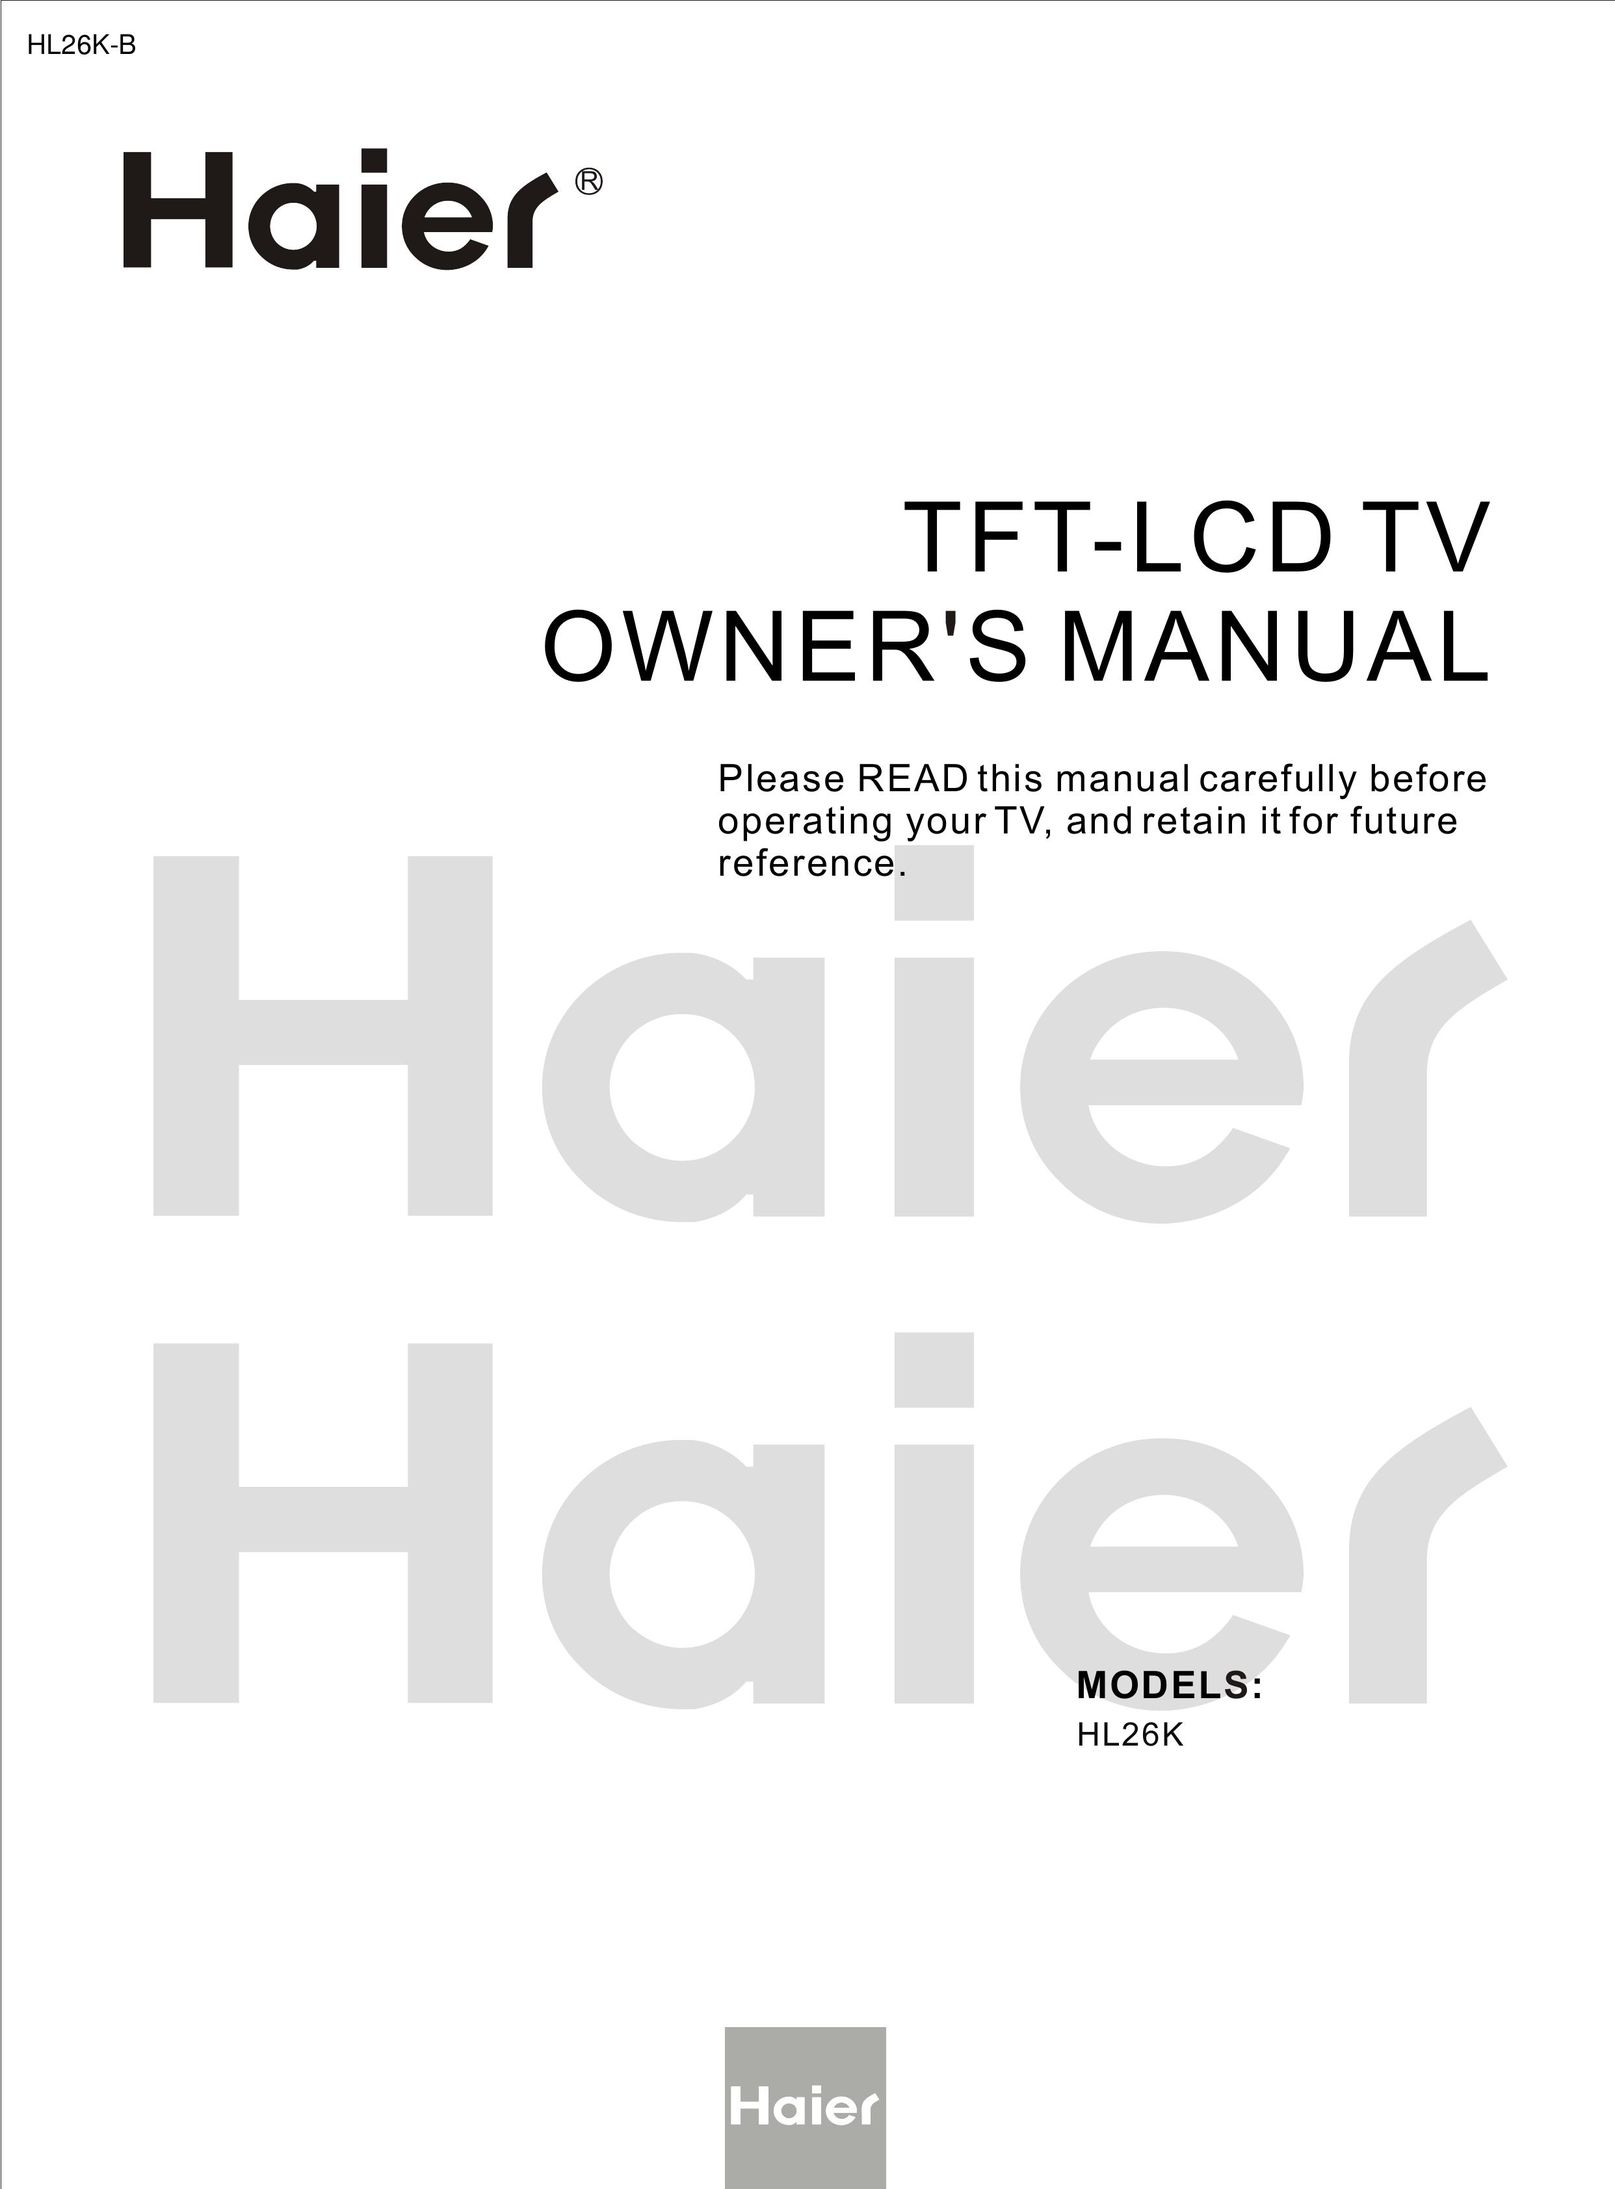 Haier HL26K Flat Panel Television User Manual